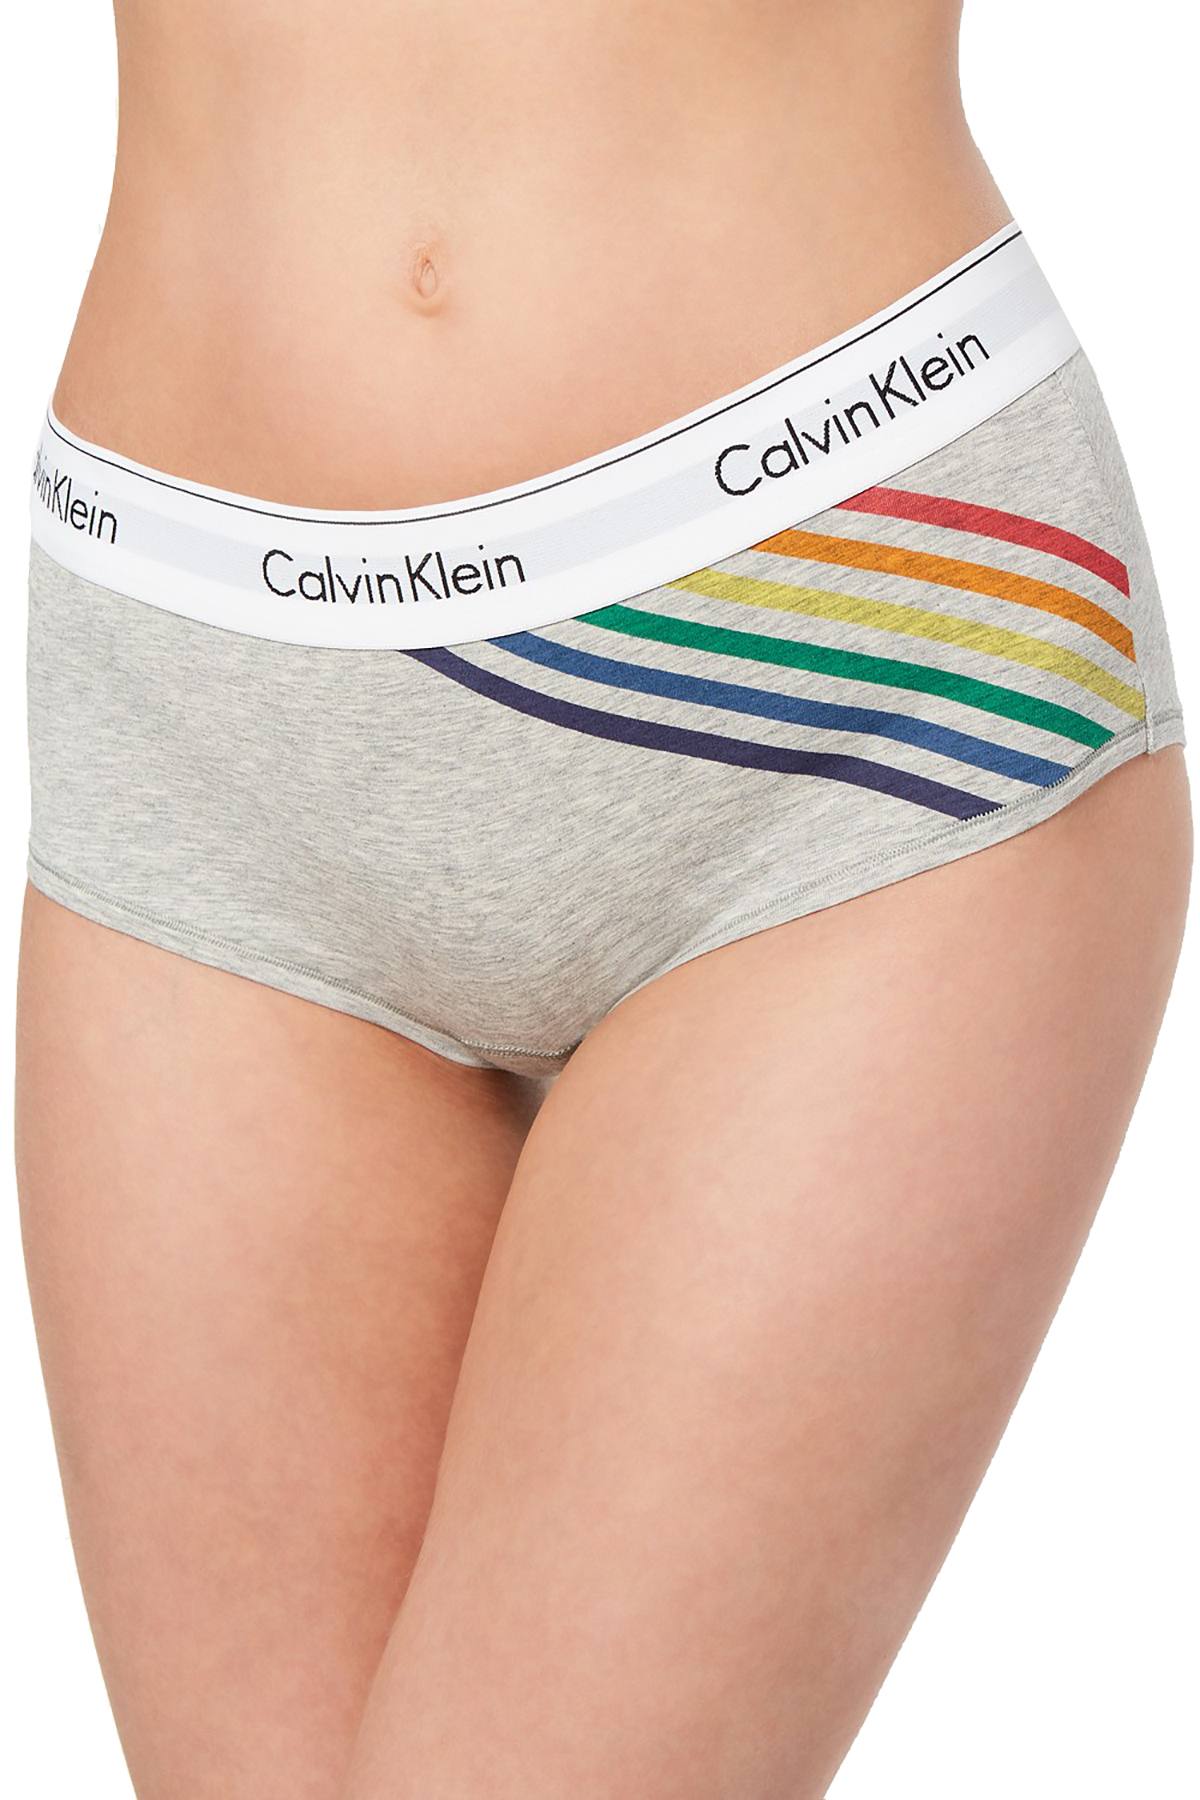 Calvin Klein Heather Grey Pride Limited Edition Rainbow Boyshort